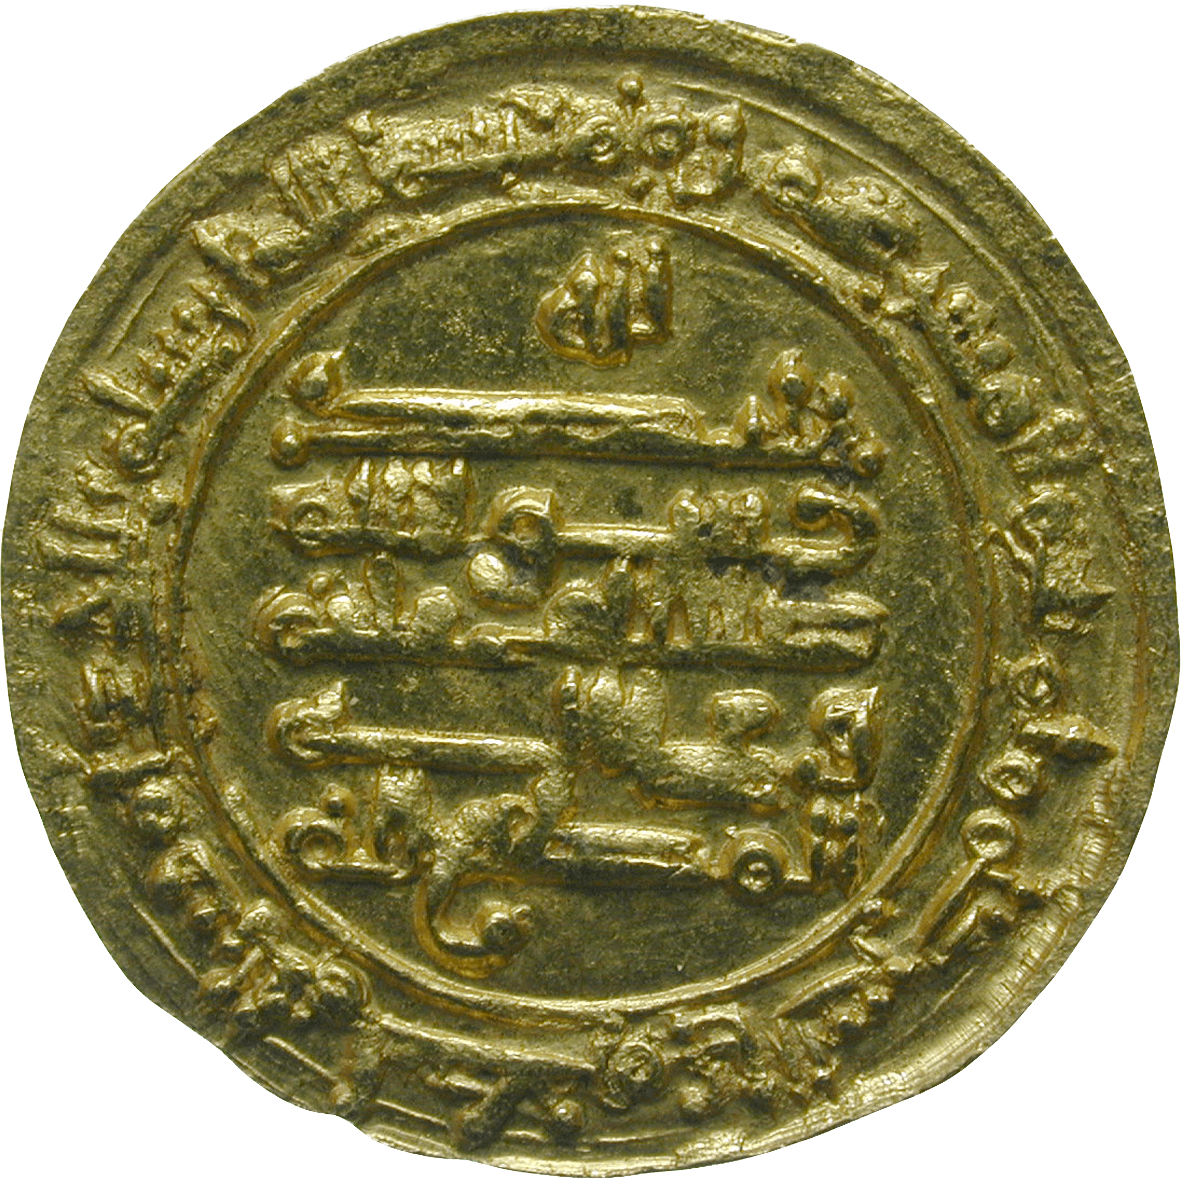 Abbasid Empire, Egypt, Ikhshidid Dynasty, Abul Qasim Ungur, Dinar 334 AH (reverse)